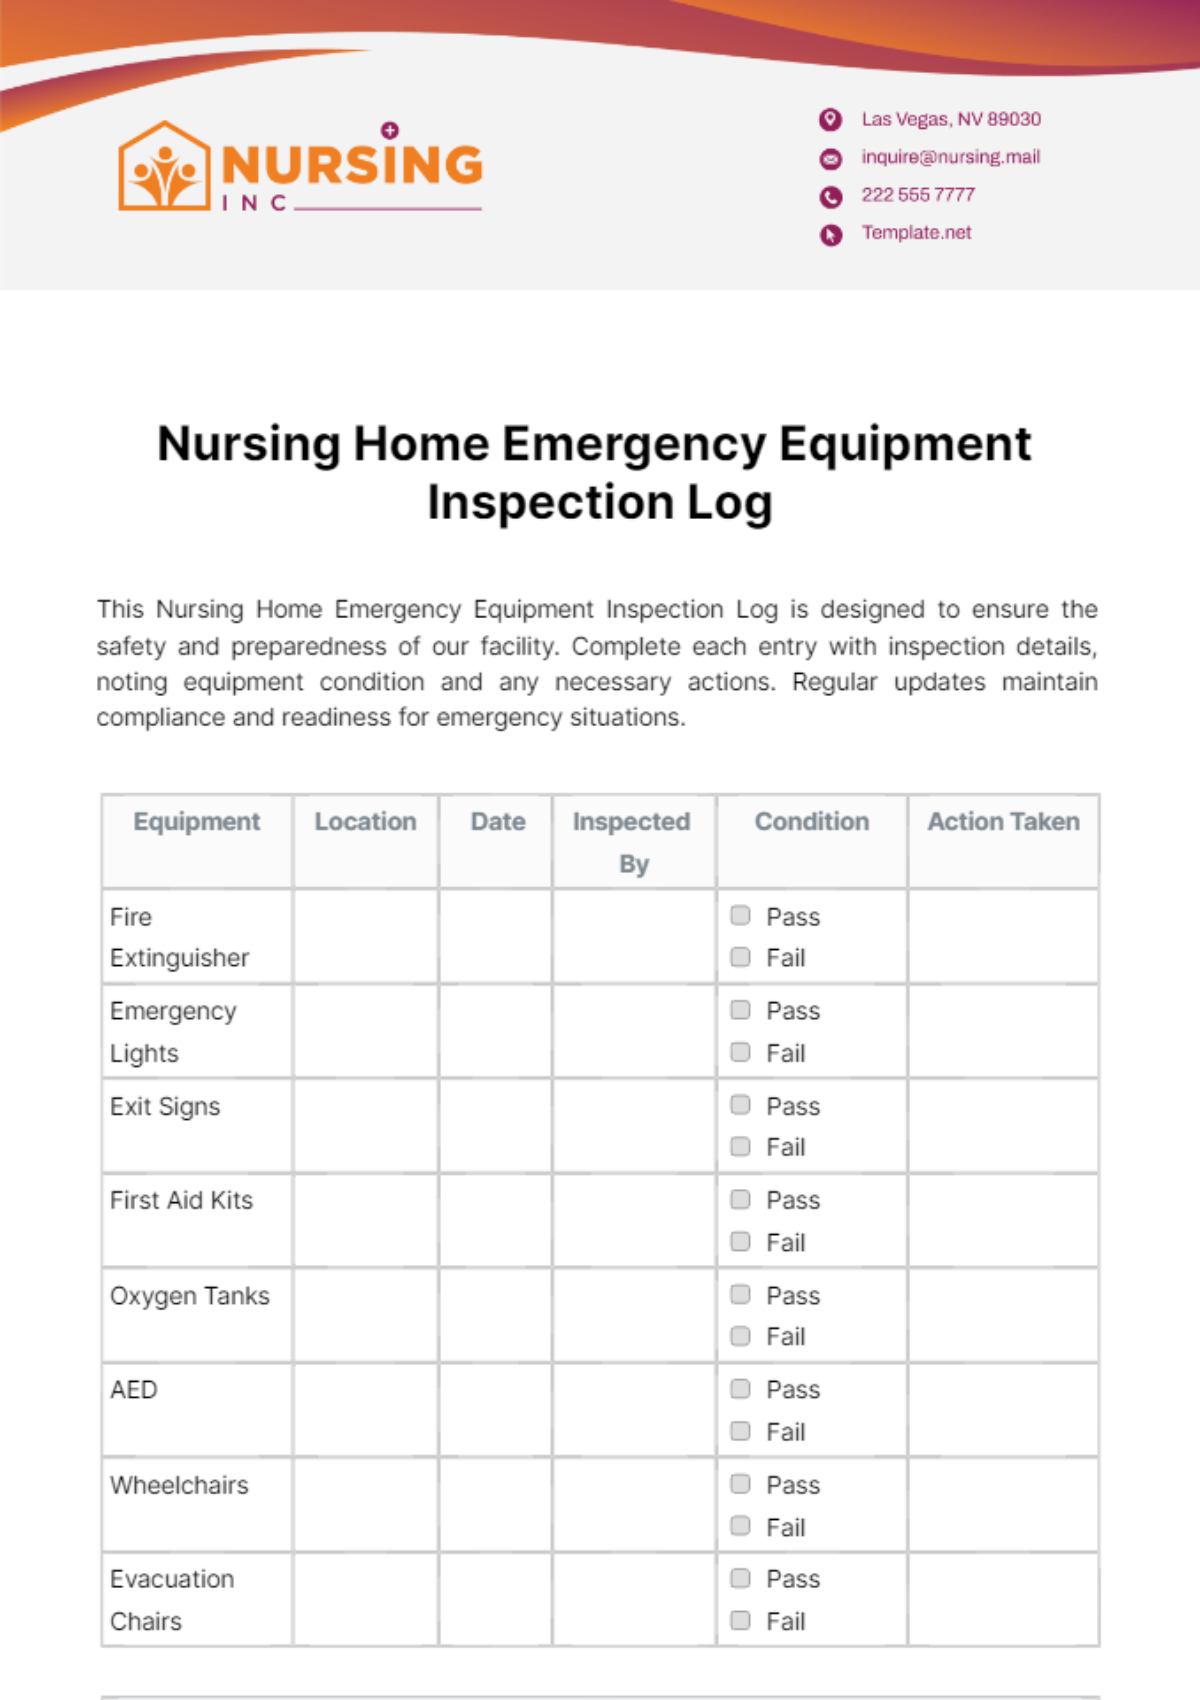 Nursing Home Emergency Equipment Inspection Log Template